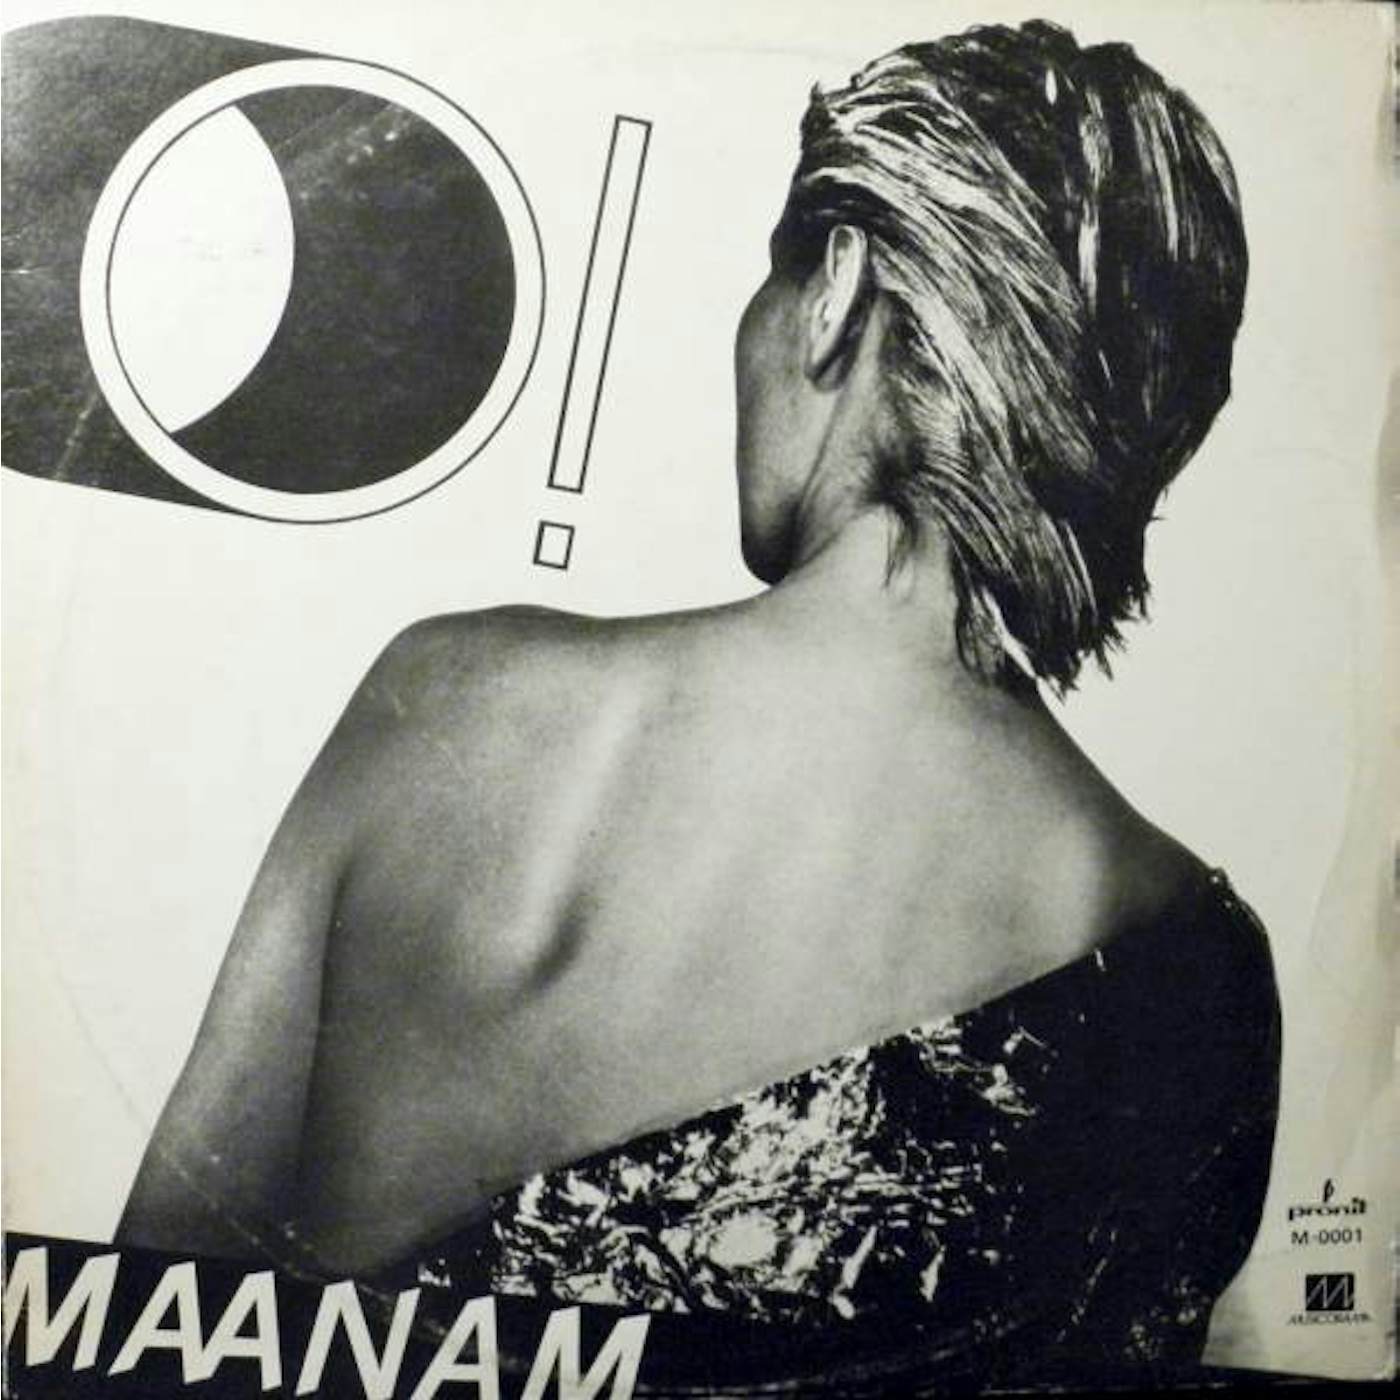 Maanam O. Vinyl Record